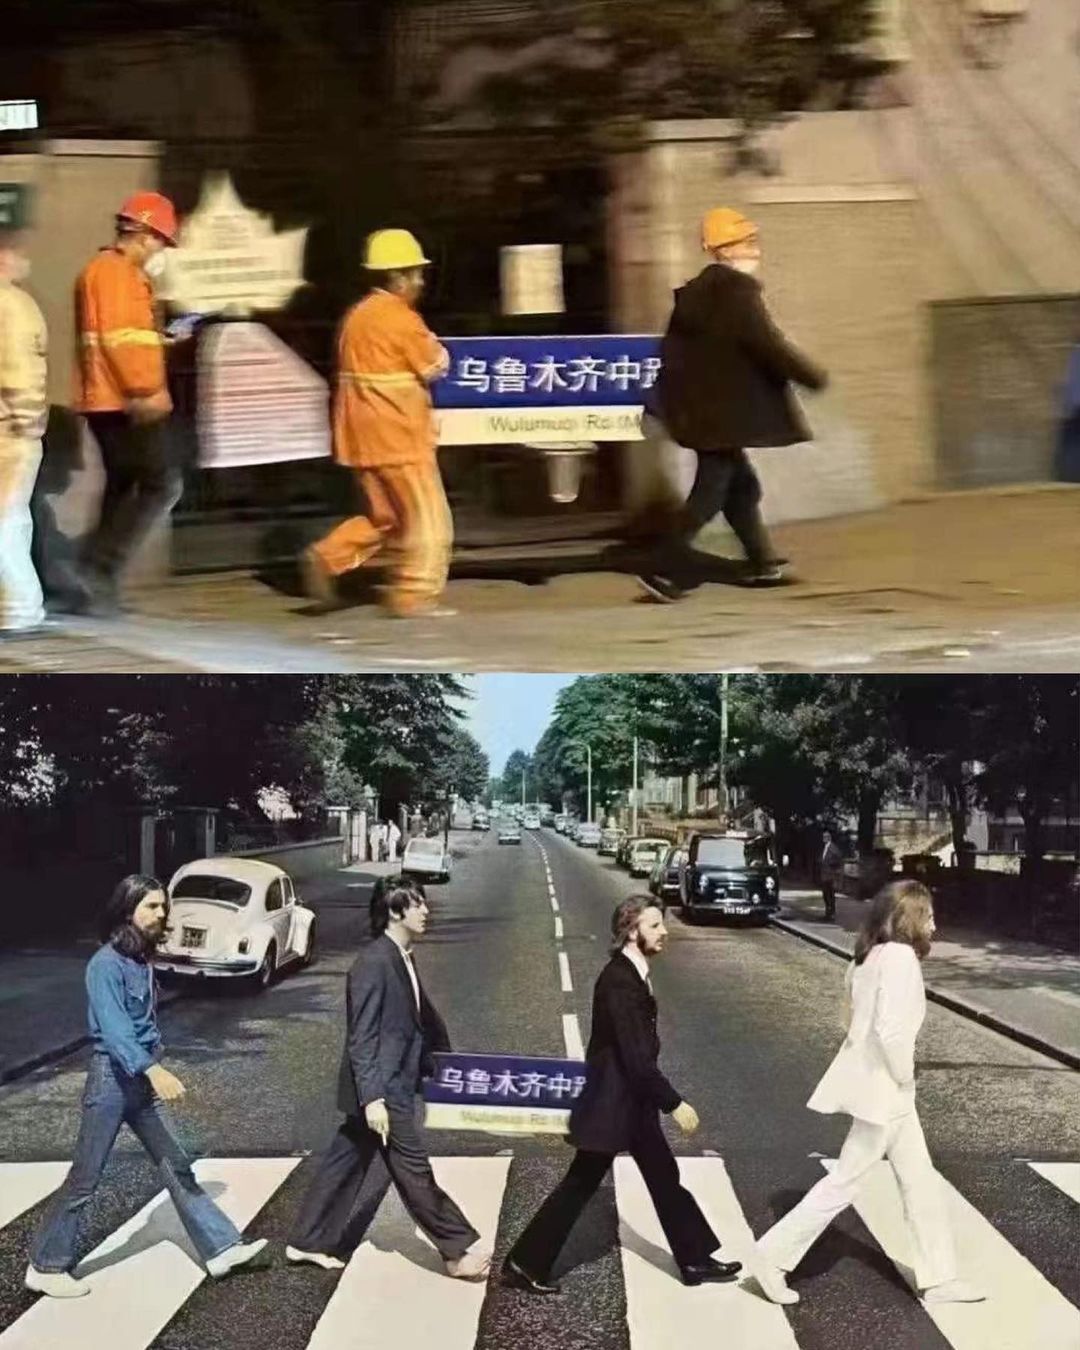 china protest covid lockdown urumqi road sign meme